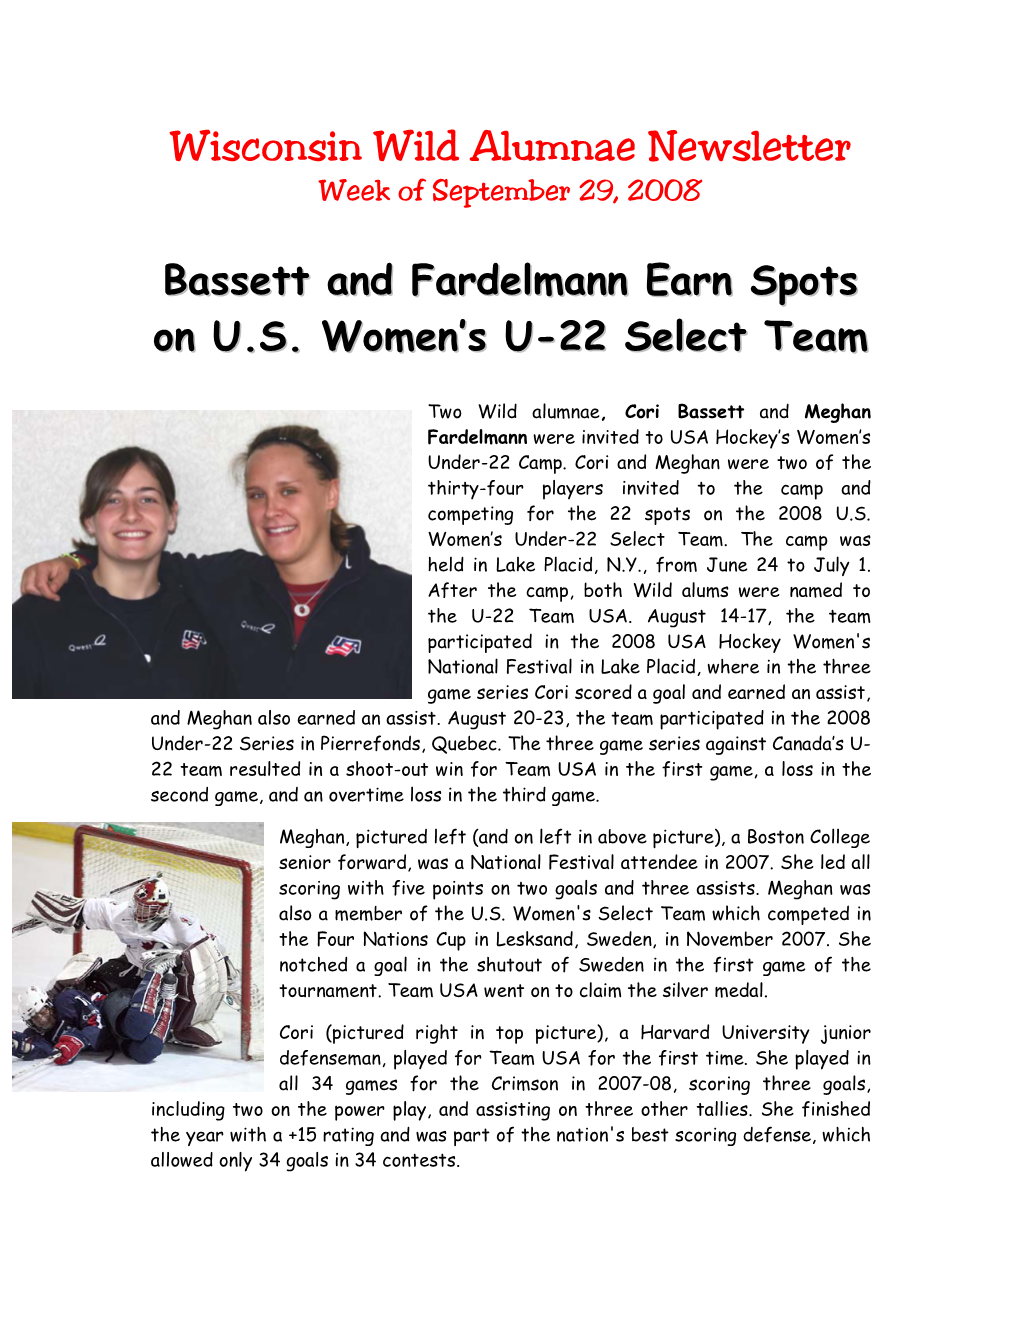 Wisconsin Wild Alumnae Newsletter Week of September 29, 2008